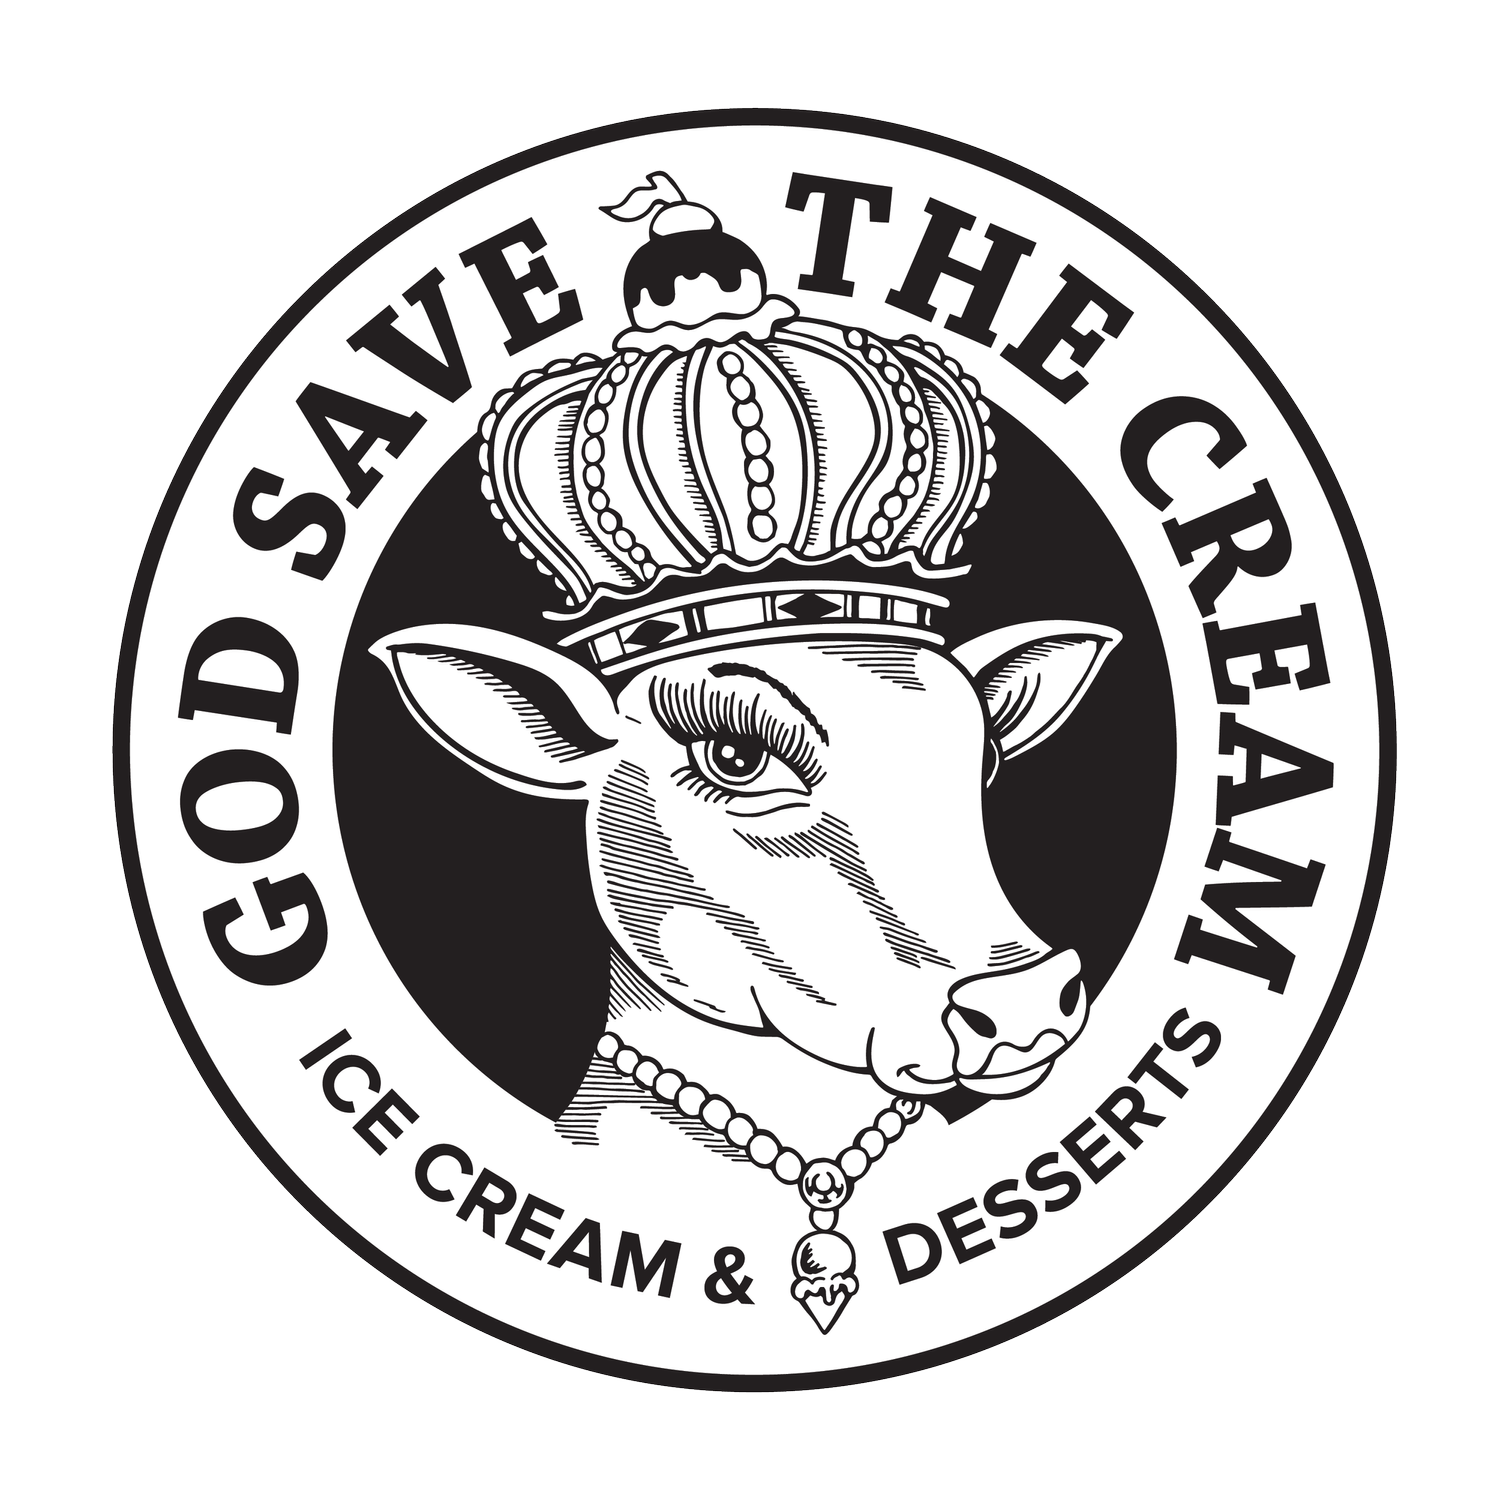 God Save the Cream